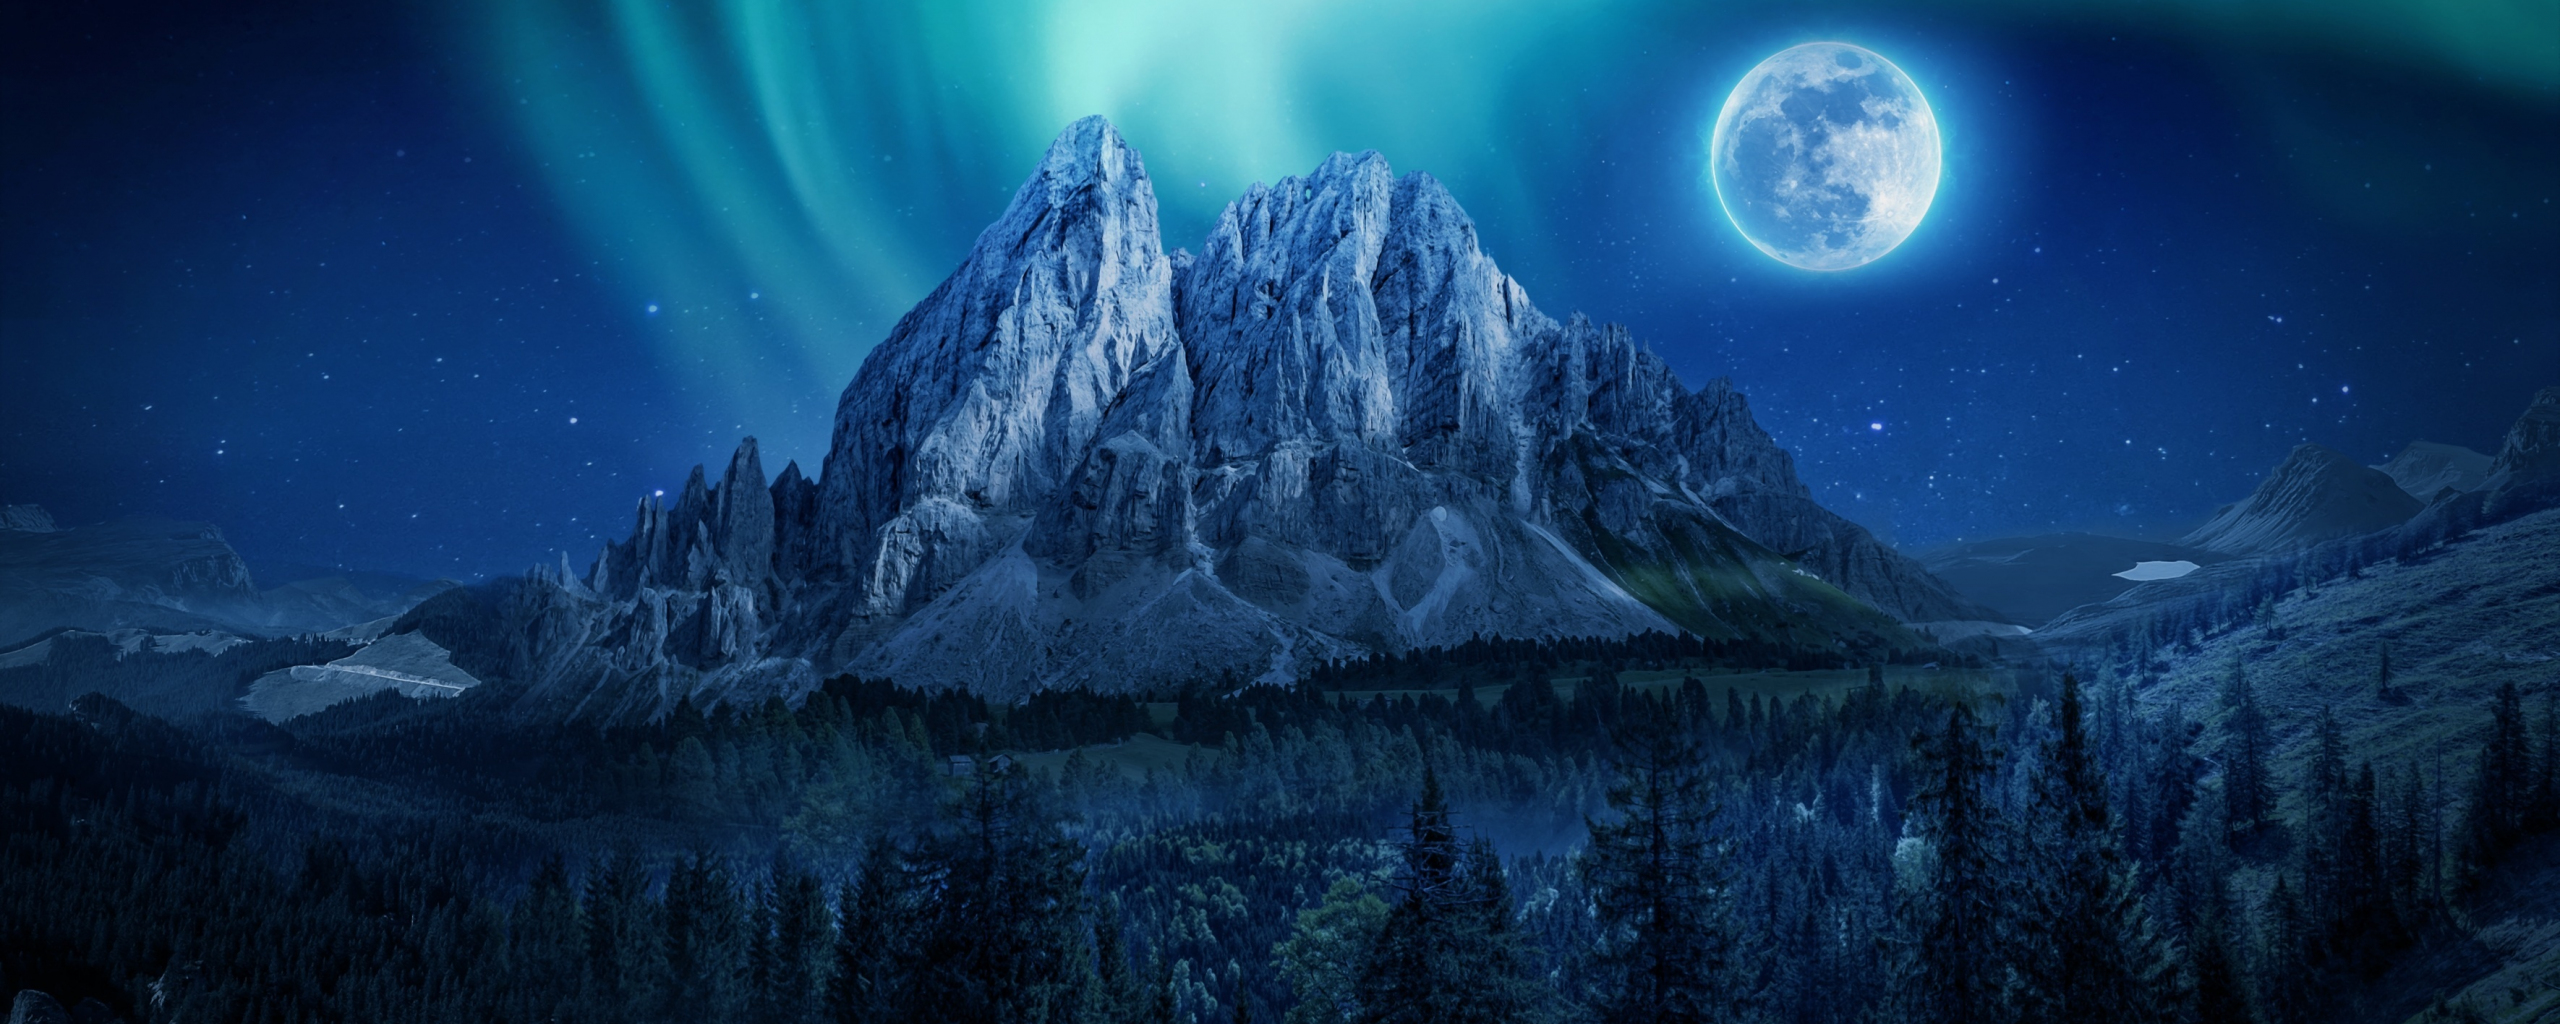 Download wallpaper 2560x1024 mountain, aurora, moon, night, dual wide ...